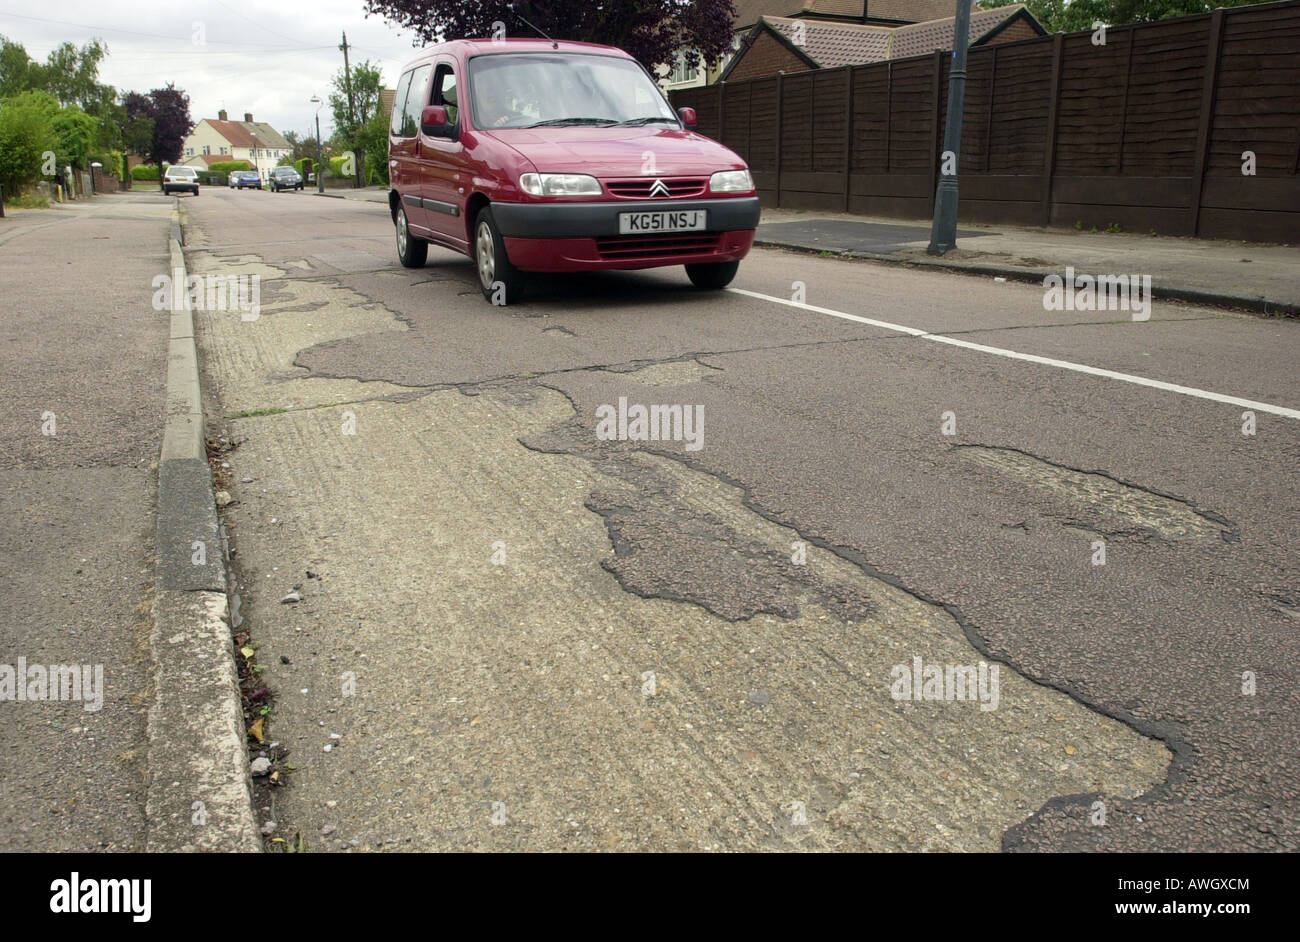 Citroen Auto fährt entlang einer schlecht asphaltierten Straße UK Stockfoto